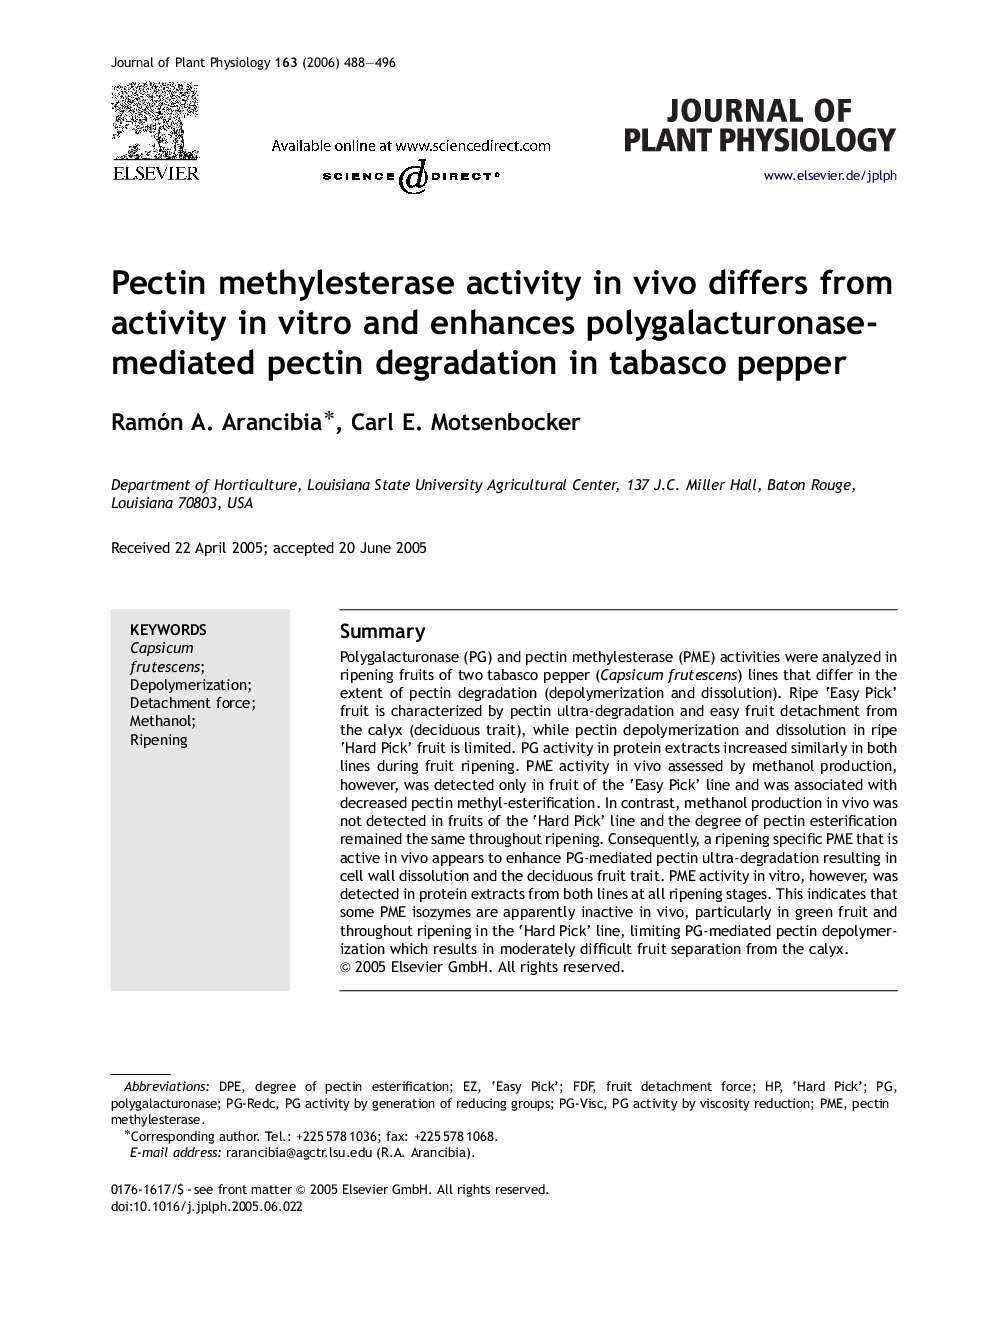 Pectin methylesterase activity in vivo differs from activity in vitro and enhances polygalacturonase-mediated pectin degradation in tabasco pepper